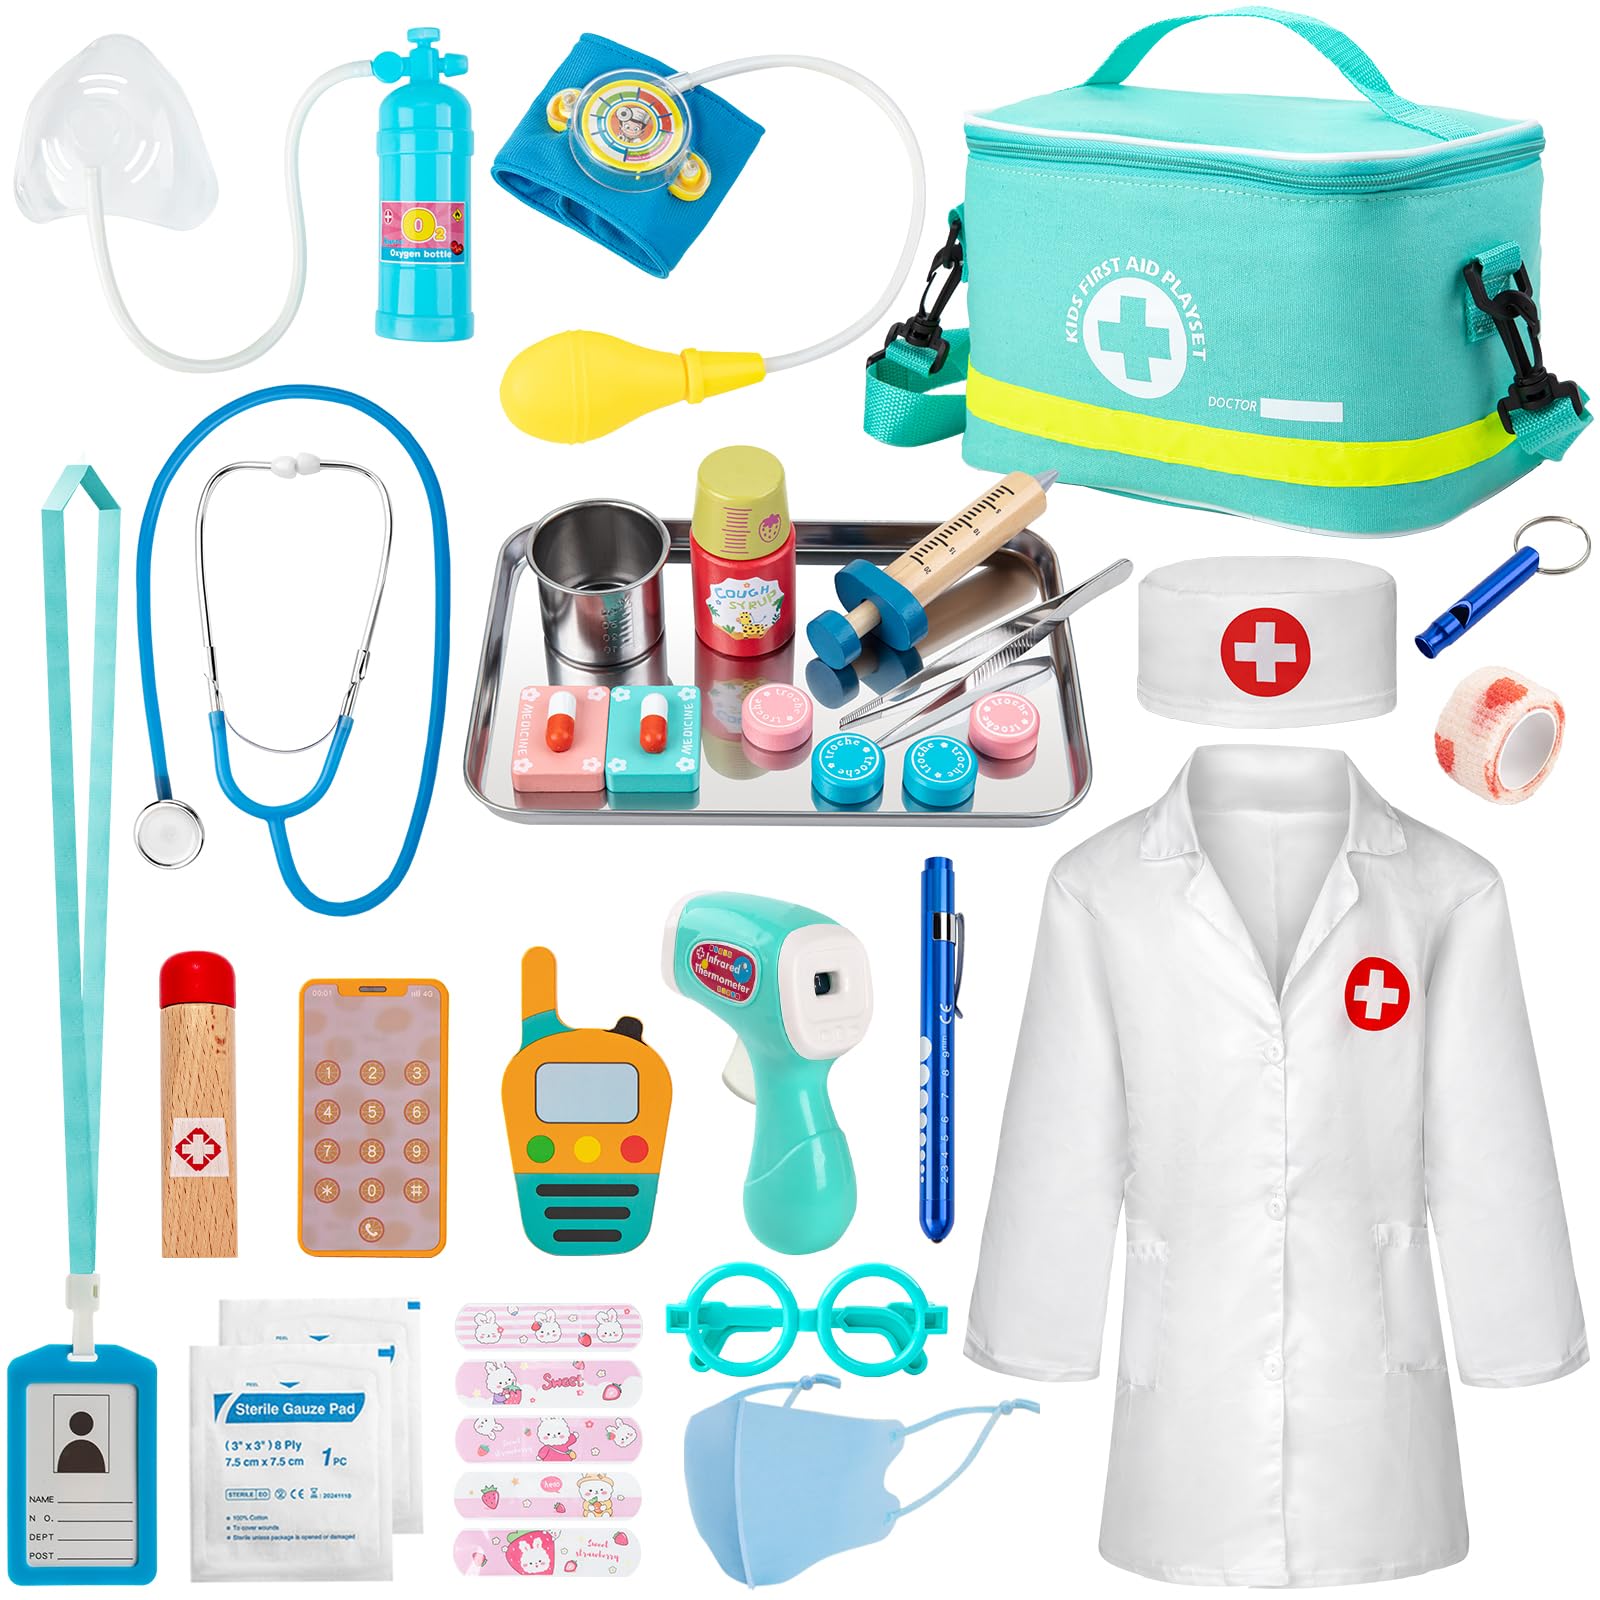 Sundaymot Doctor Kit for Kids, 34 Pcs Pretend Playset for Toddlers, Doctor kit for Toddlers 3-5, with Medical Bag, Stethoscope a